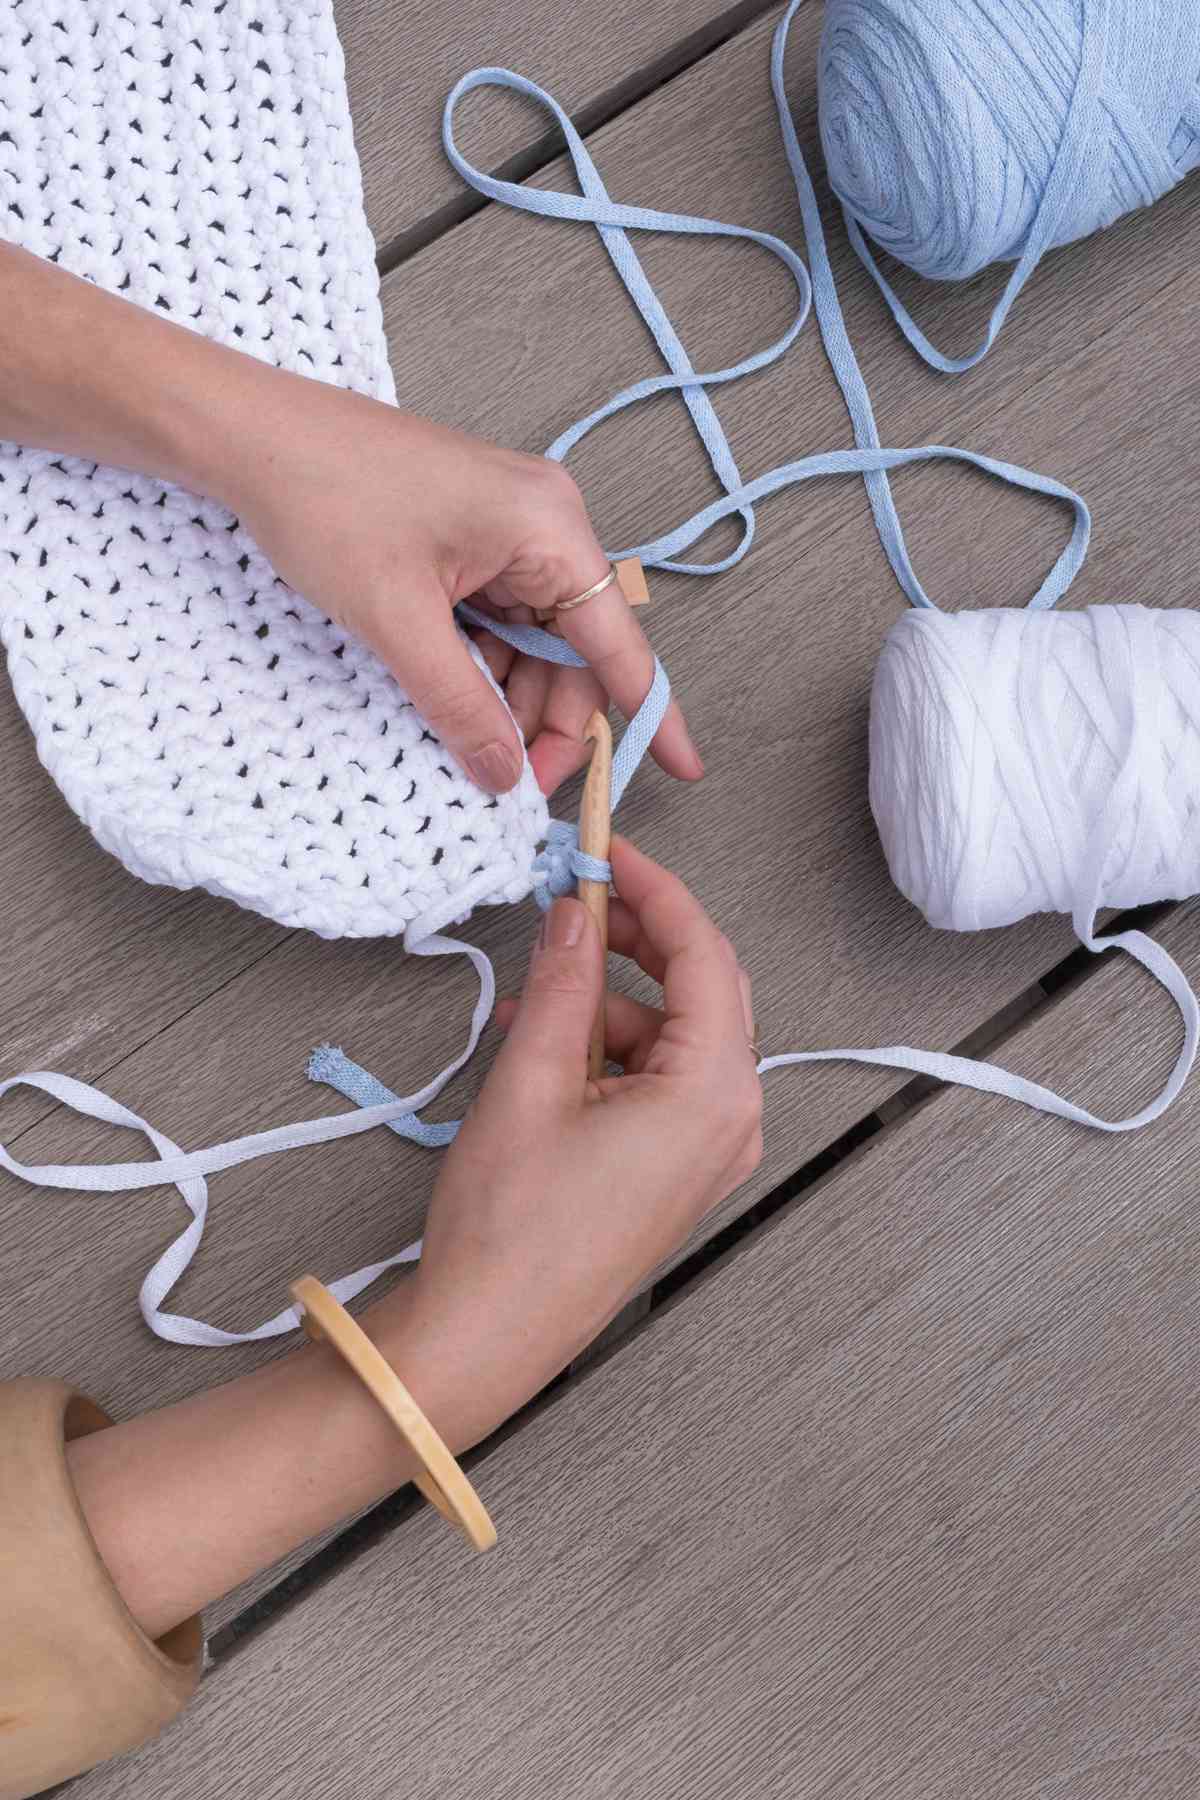 Crochet items